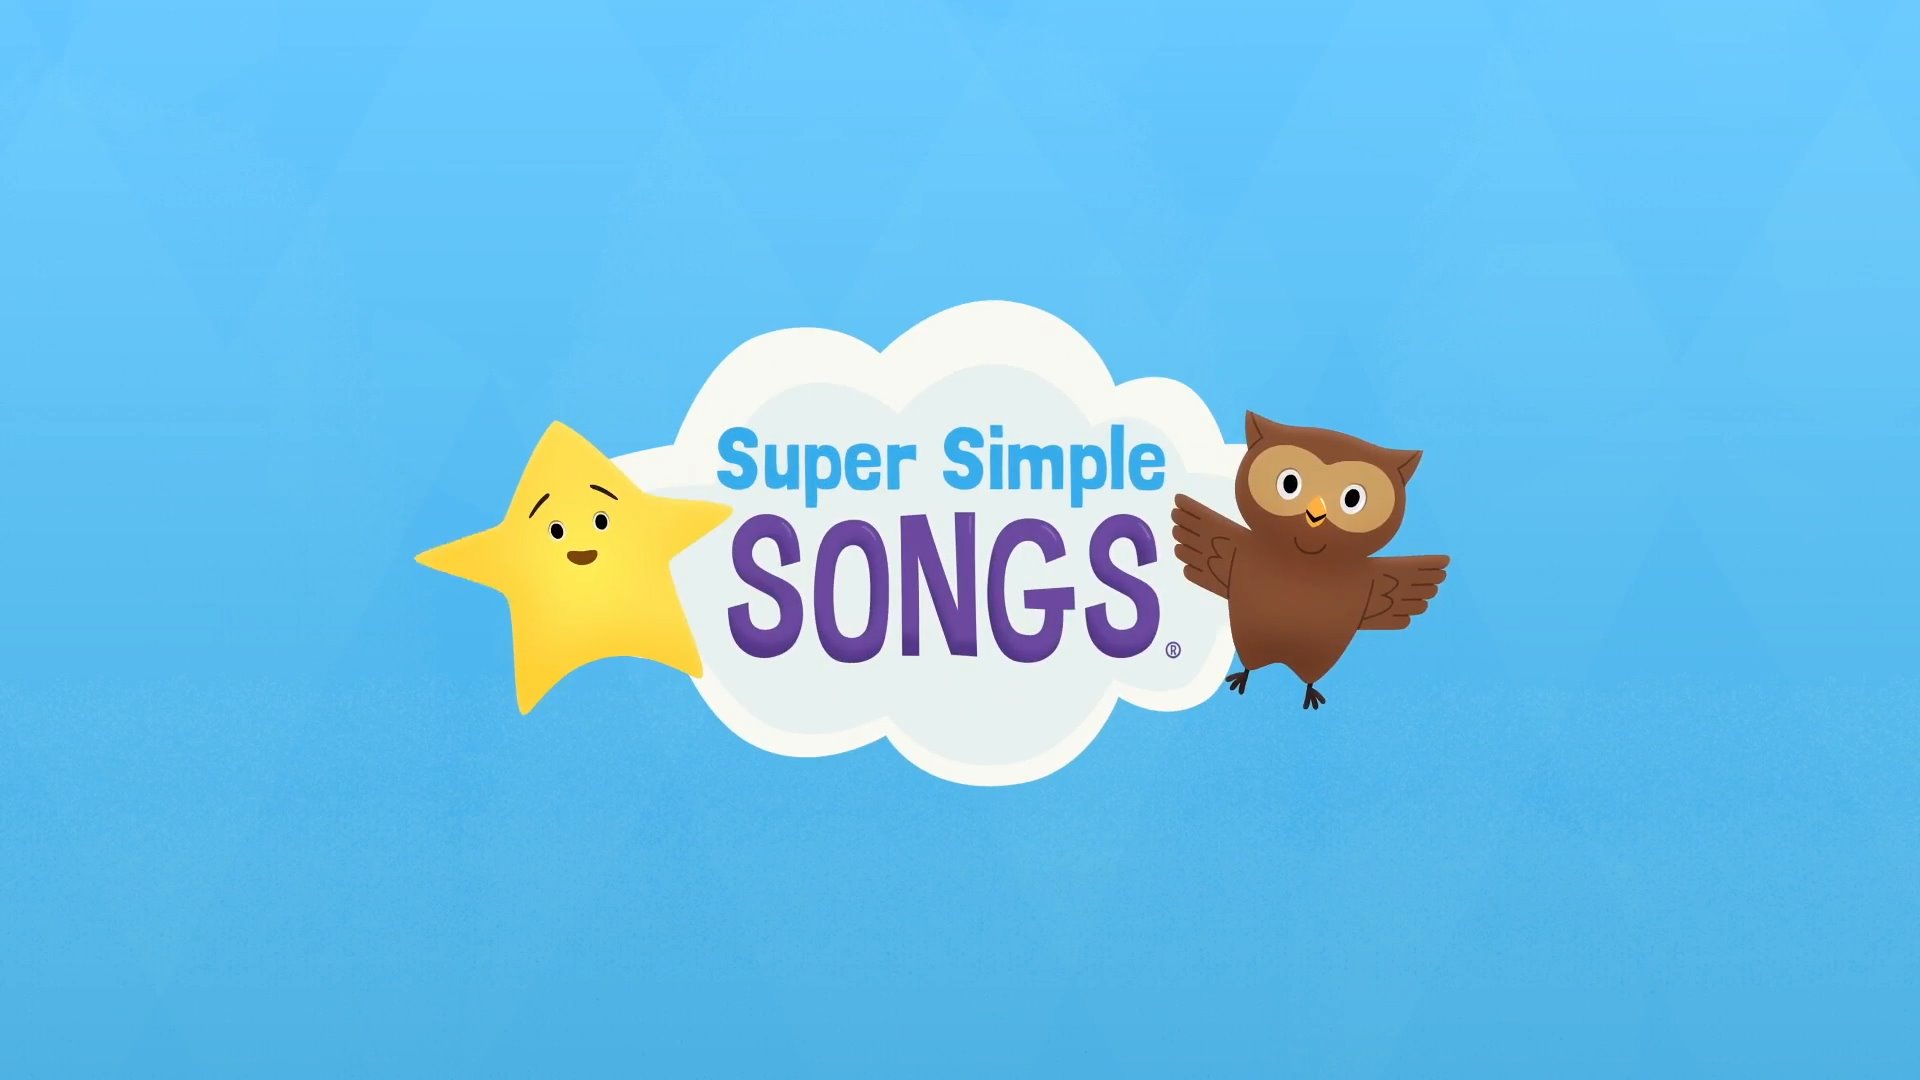 Super simple songs bye. Симпл Сонг. Супер Симпл Сонгс. Super simple Songs. Super simple Songs Kids Songs.